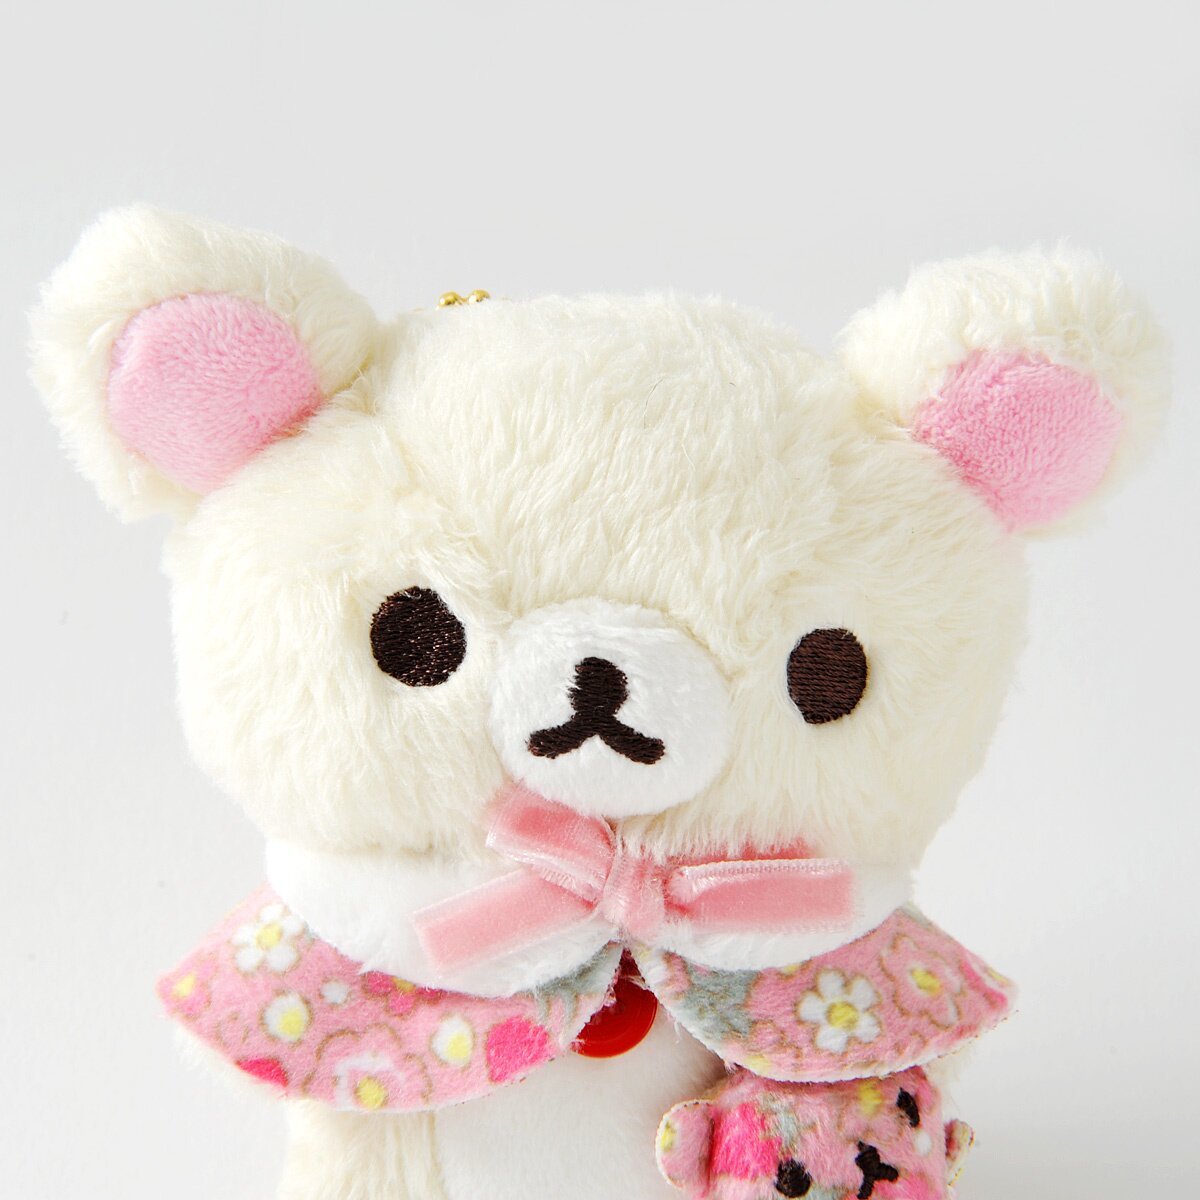 Teddy Bear Maple Cookie Keychain (Strawberry) – Harajuku Hearts